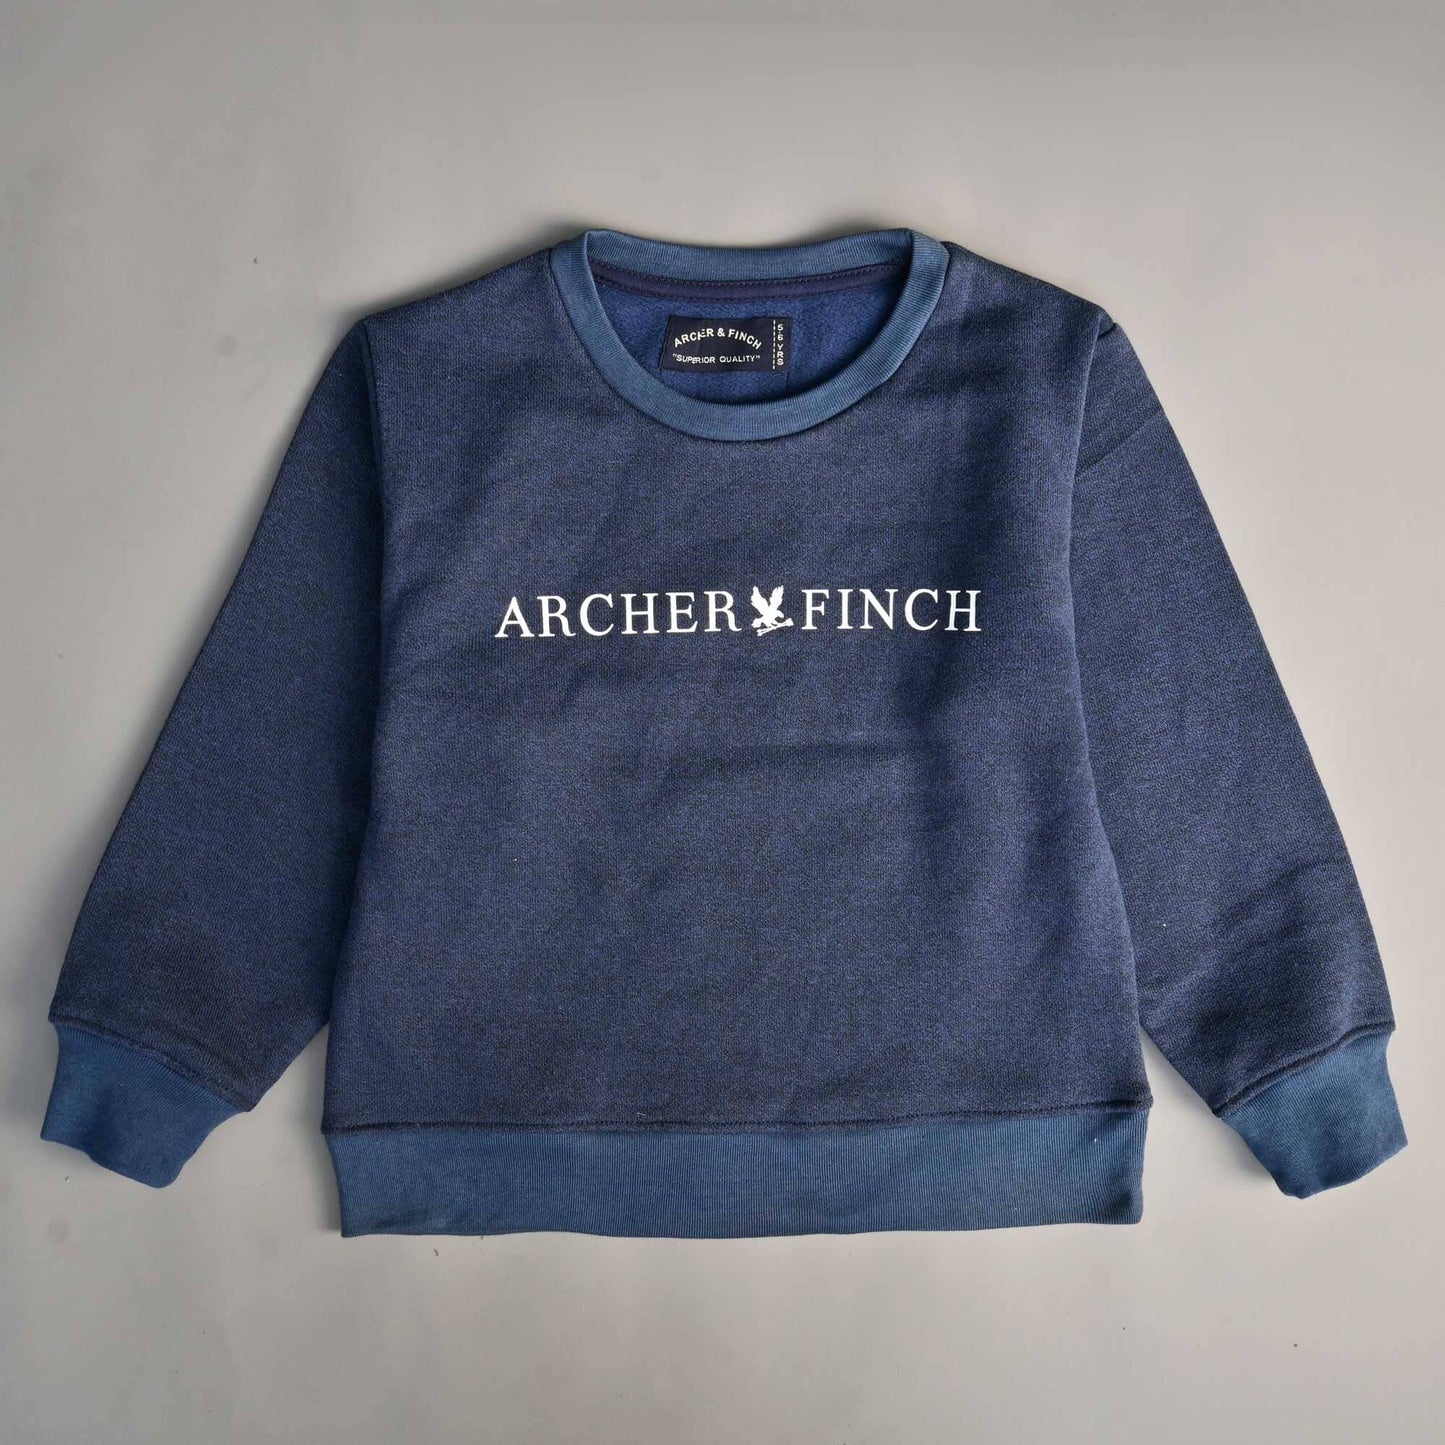 A&F Boy's Archer & Finch Printed Fleece Sweat Shirt Boy's Sweat Shirt LFS Navy Marl 3-4 Years 